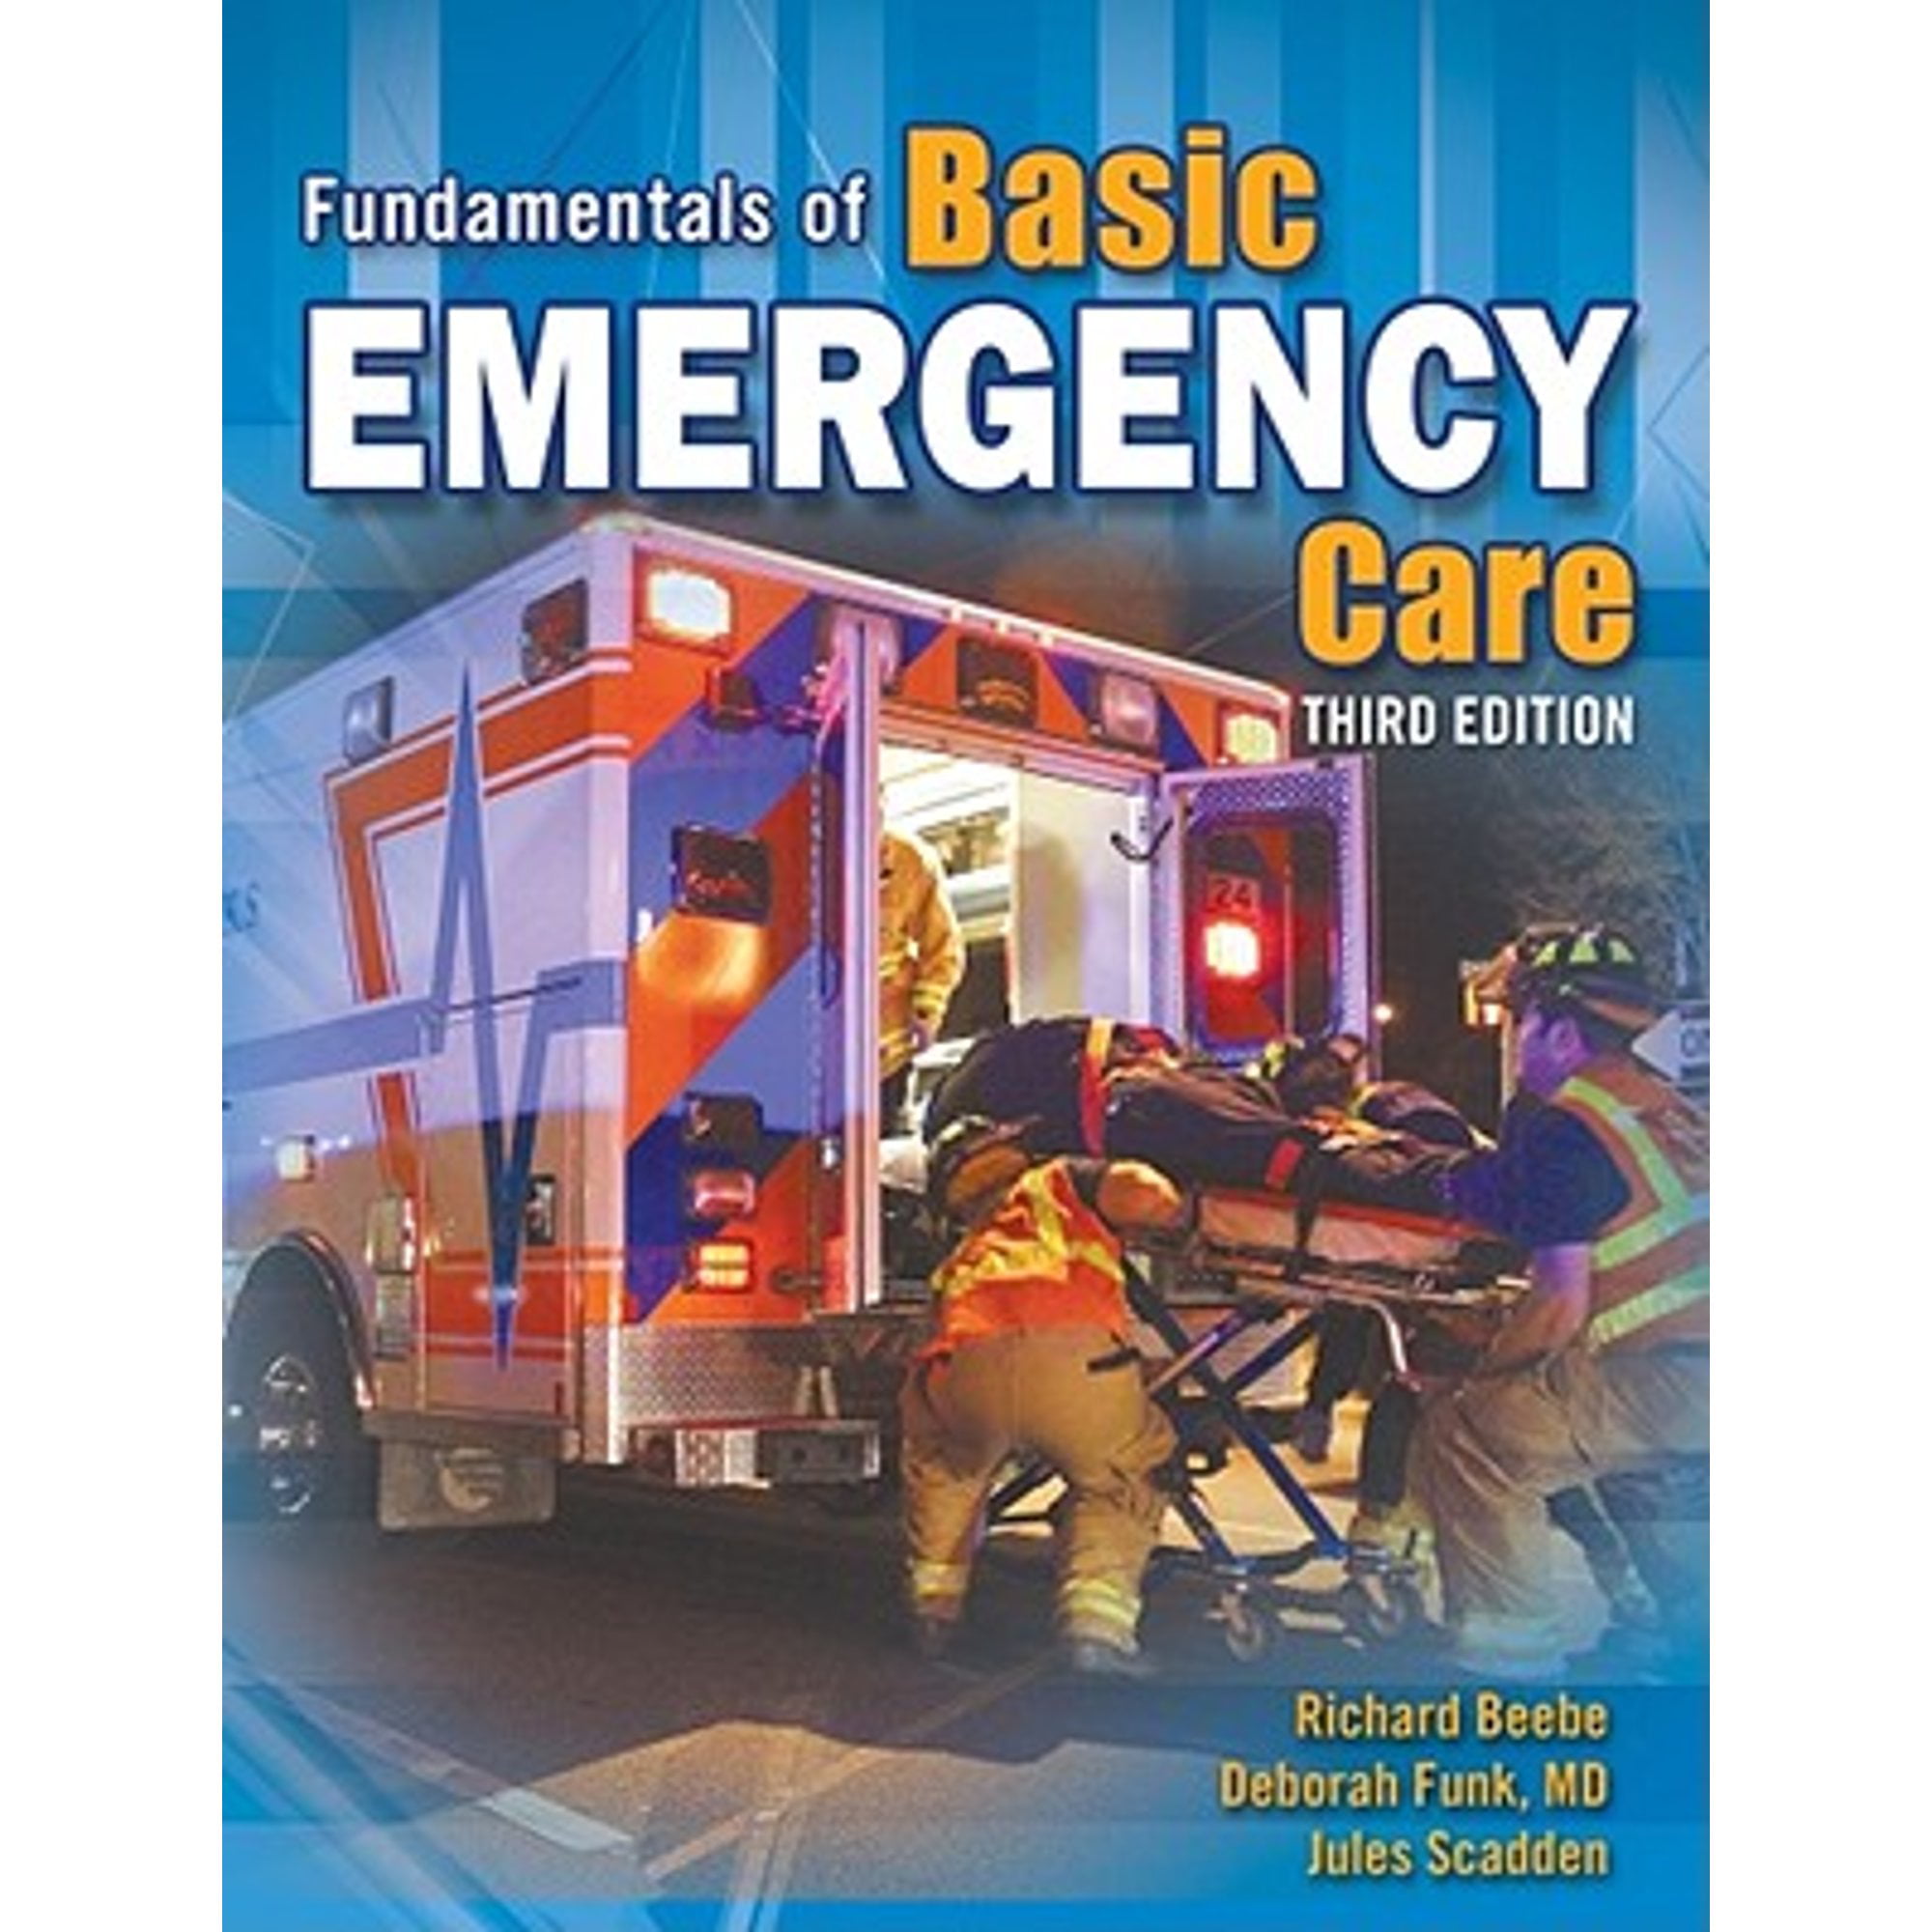 Richard　Deborah　by　(Hardcover　Basic　Care　Emergency　of　Beebe,　Pre-Owned　Scadden　Funk,　Fundamentals　9781435442177)　Jules